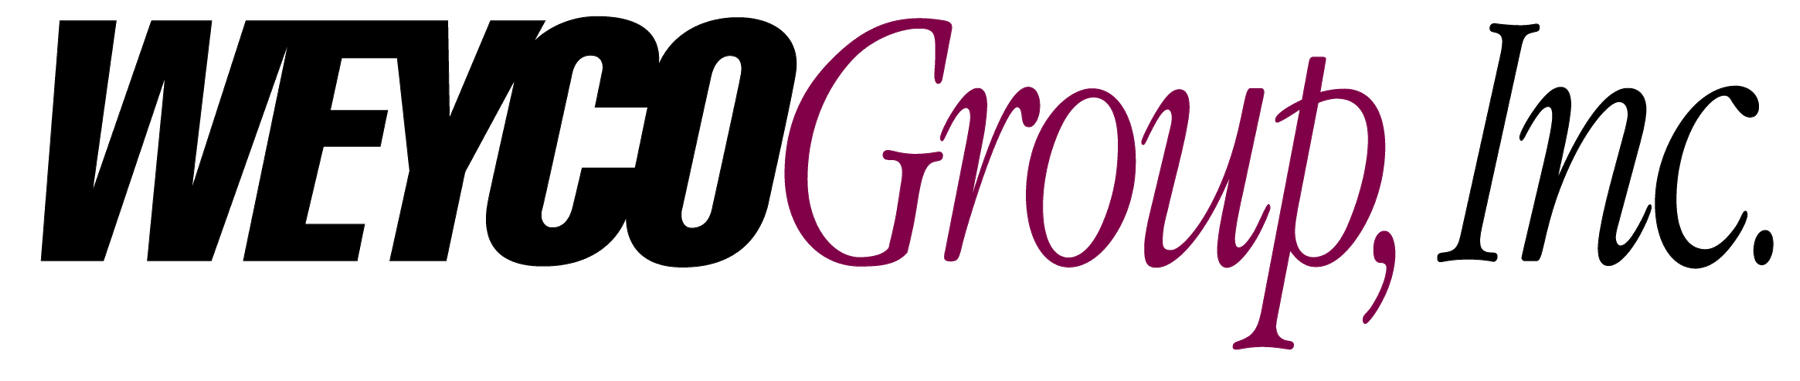 Weyco Group, Inc. Company Logo